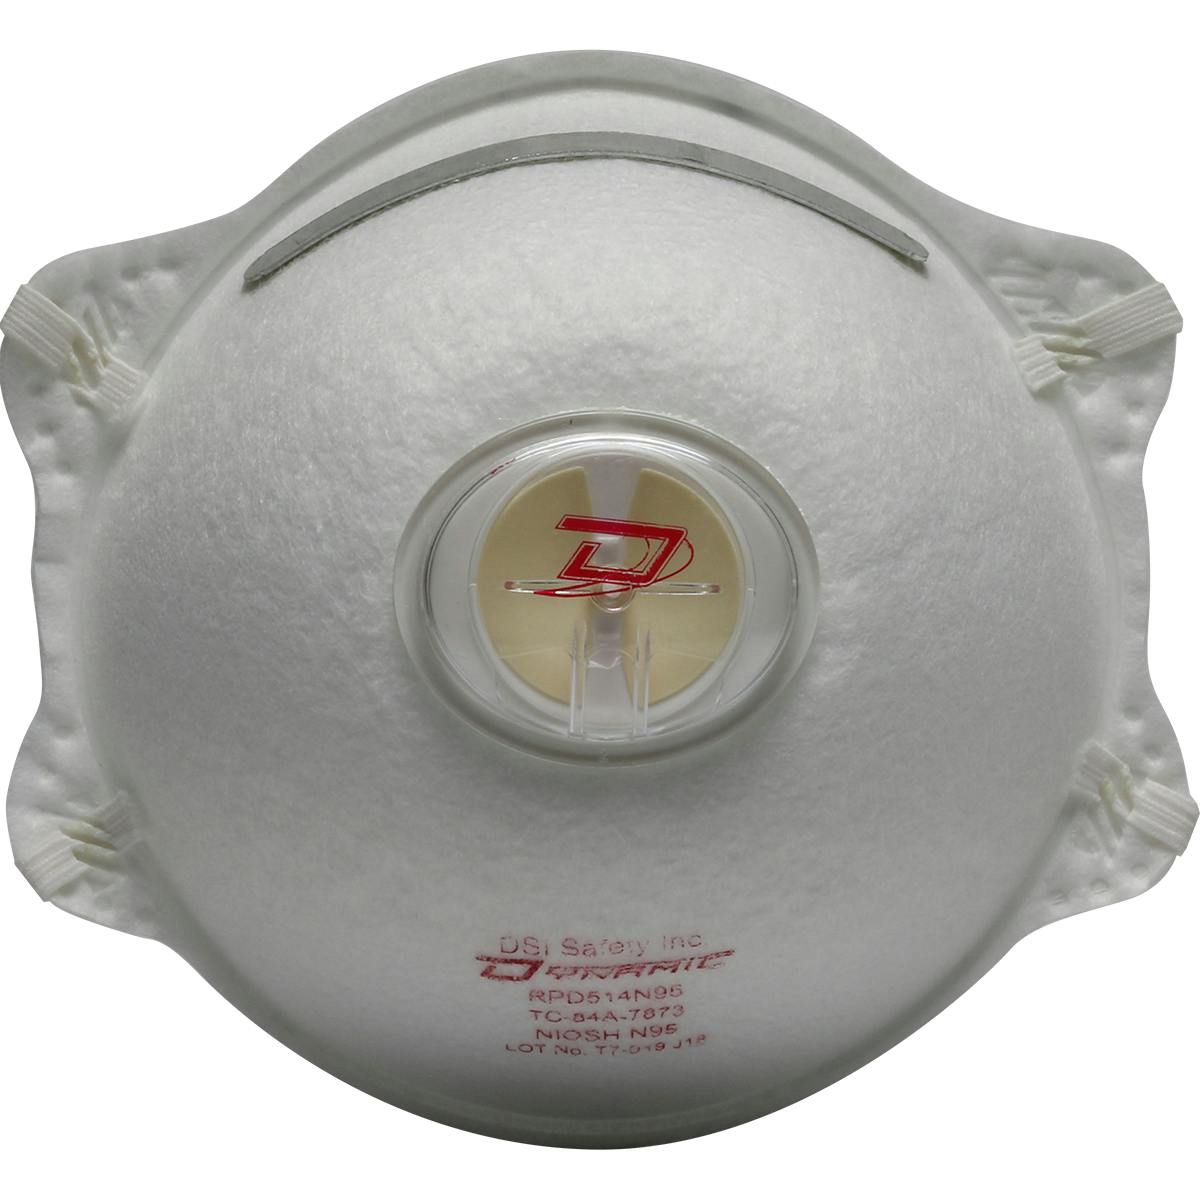 Standard N95 Disposable Respirator - 10 Pack, White (270-RPD514N95) - OS_1